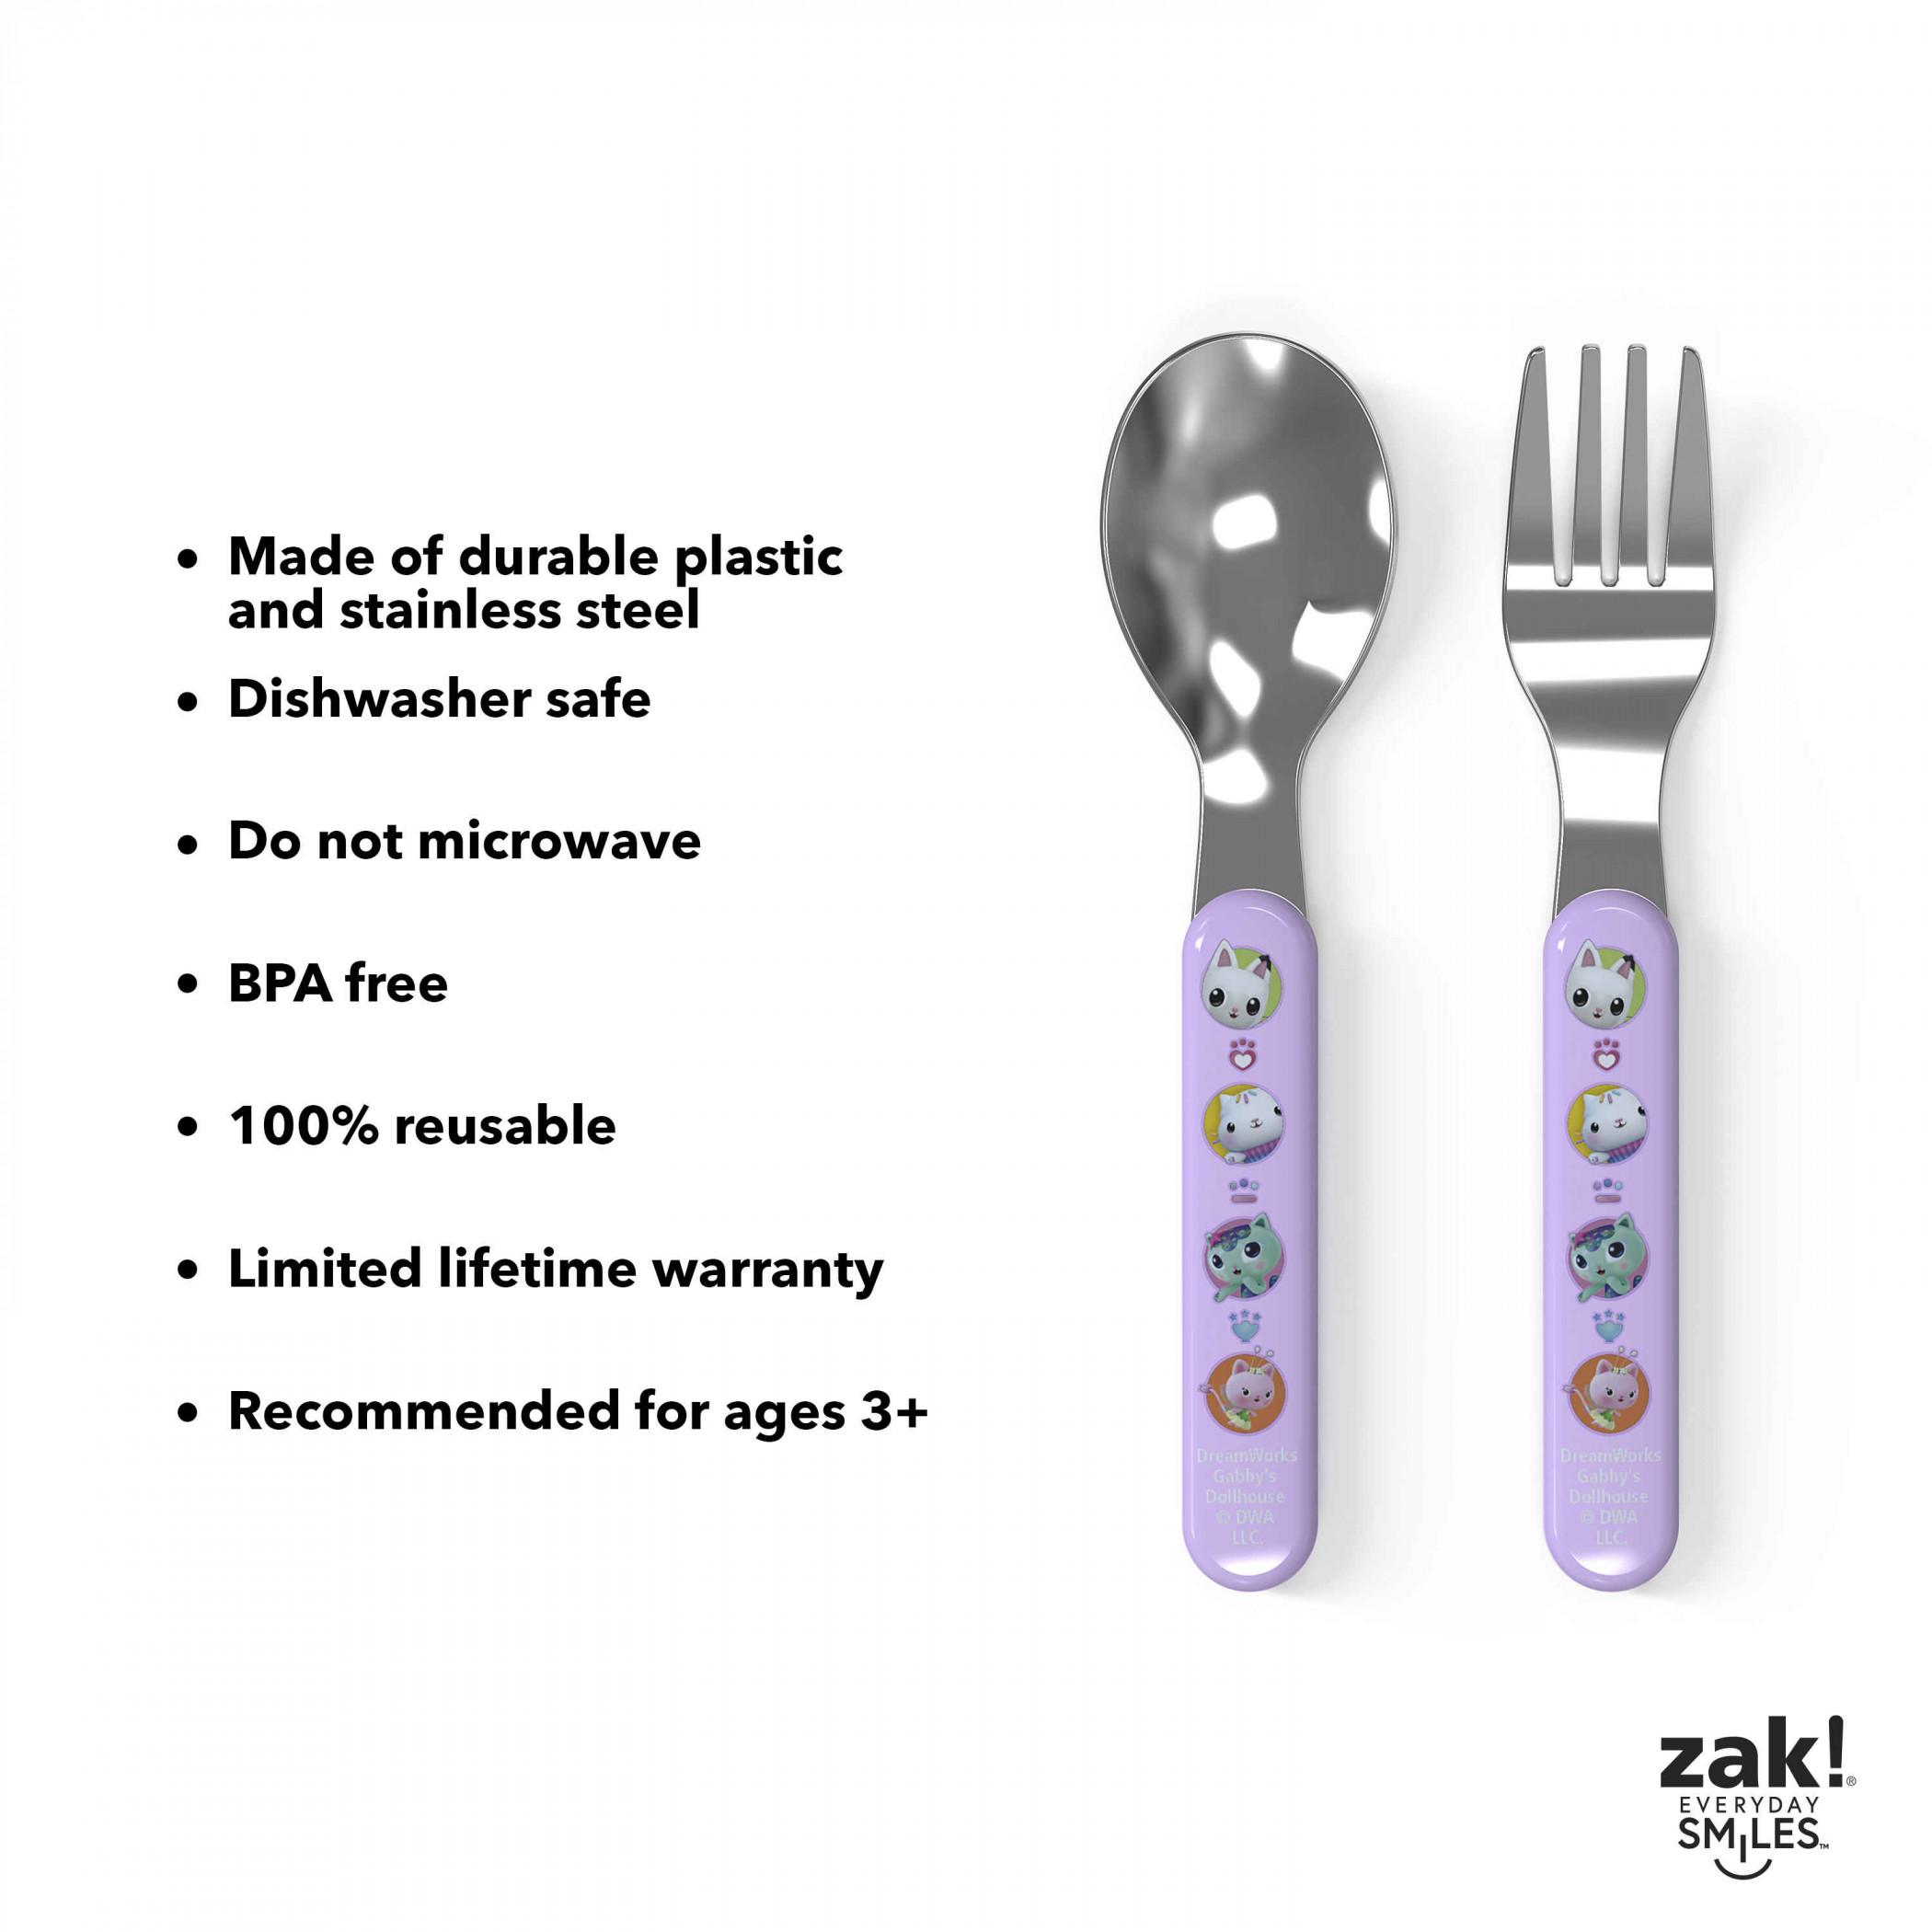 Gabby's Dollhouse Kid's Fork and Spoon Set